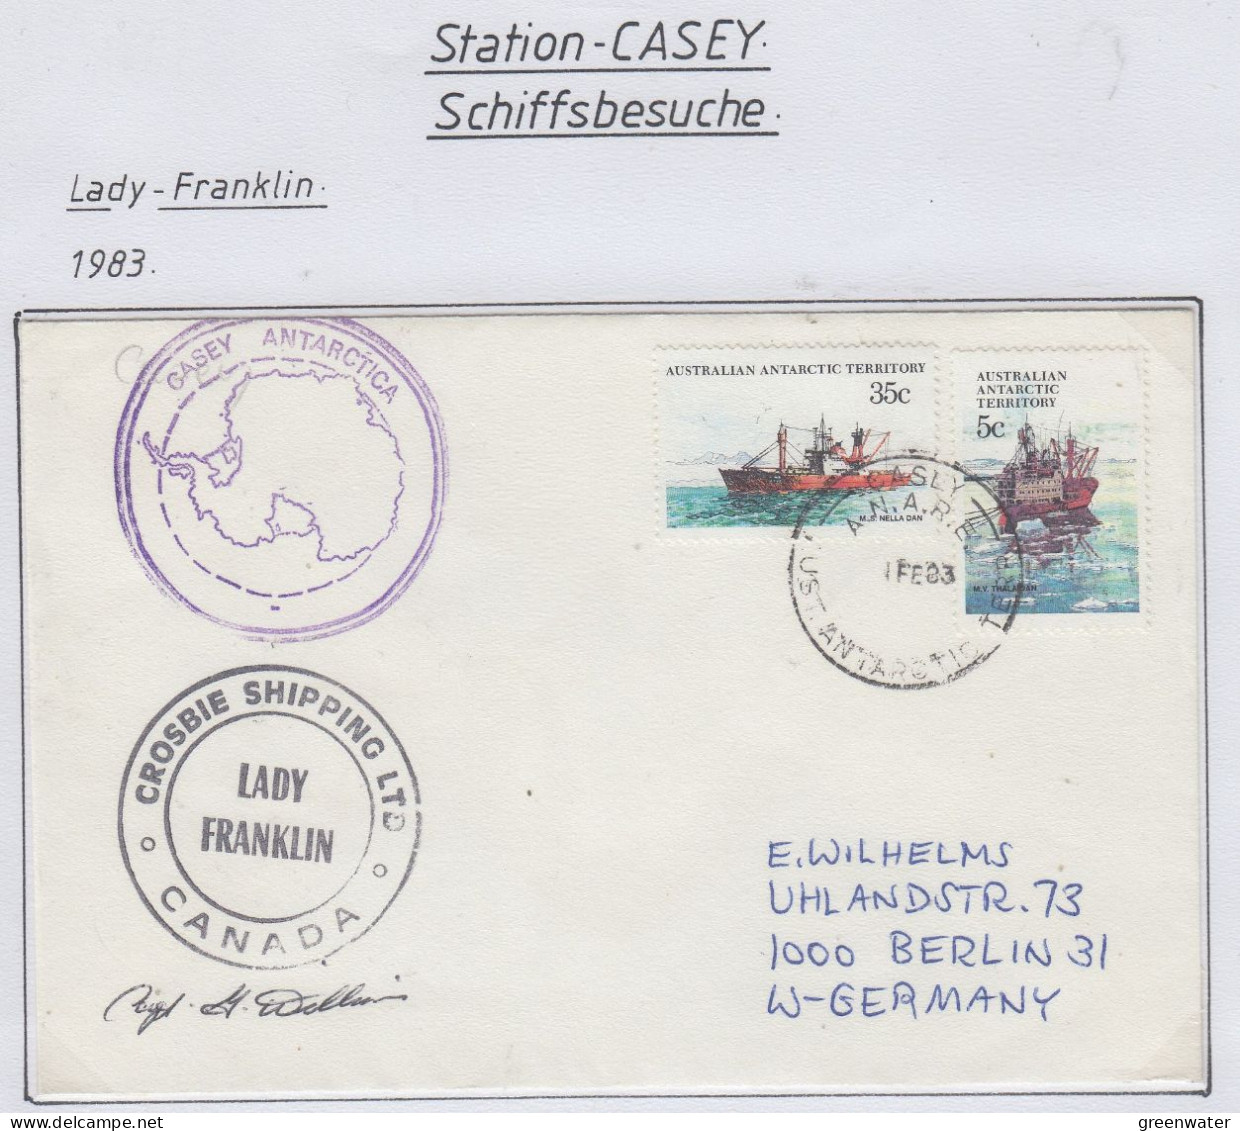 AAT  Ship Visit Lady Franklin Signature Ca Casey 1 FE 1983 (CS161) - Lettres & Documents